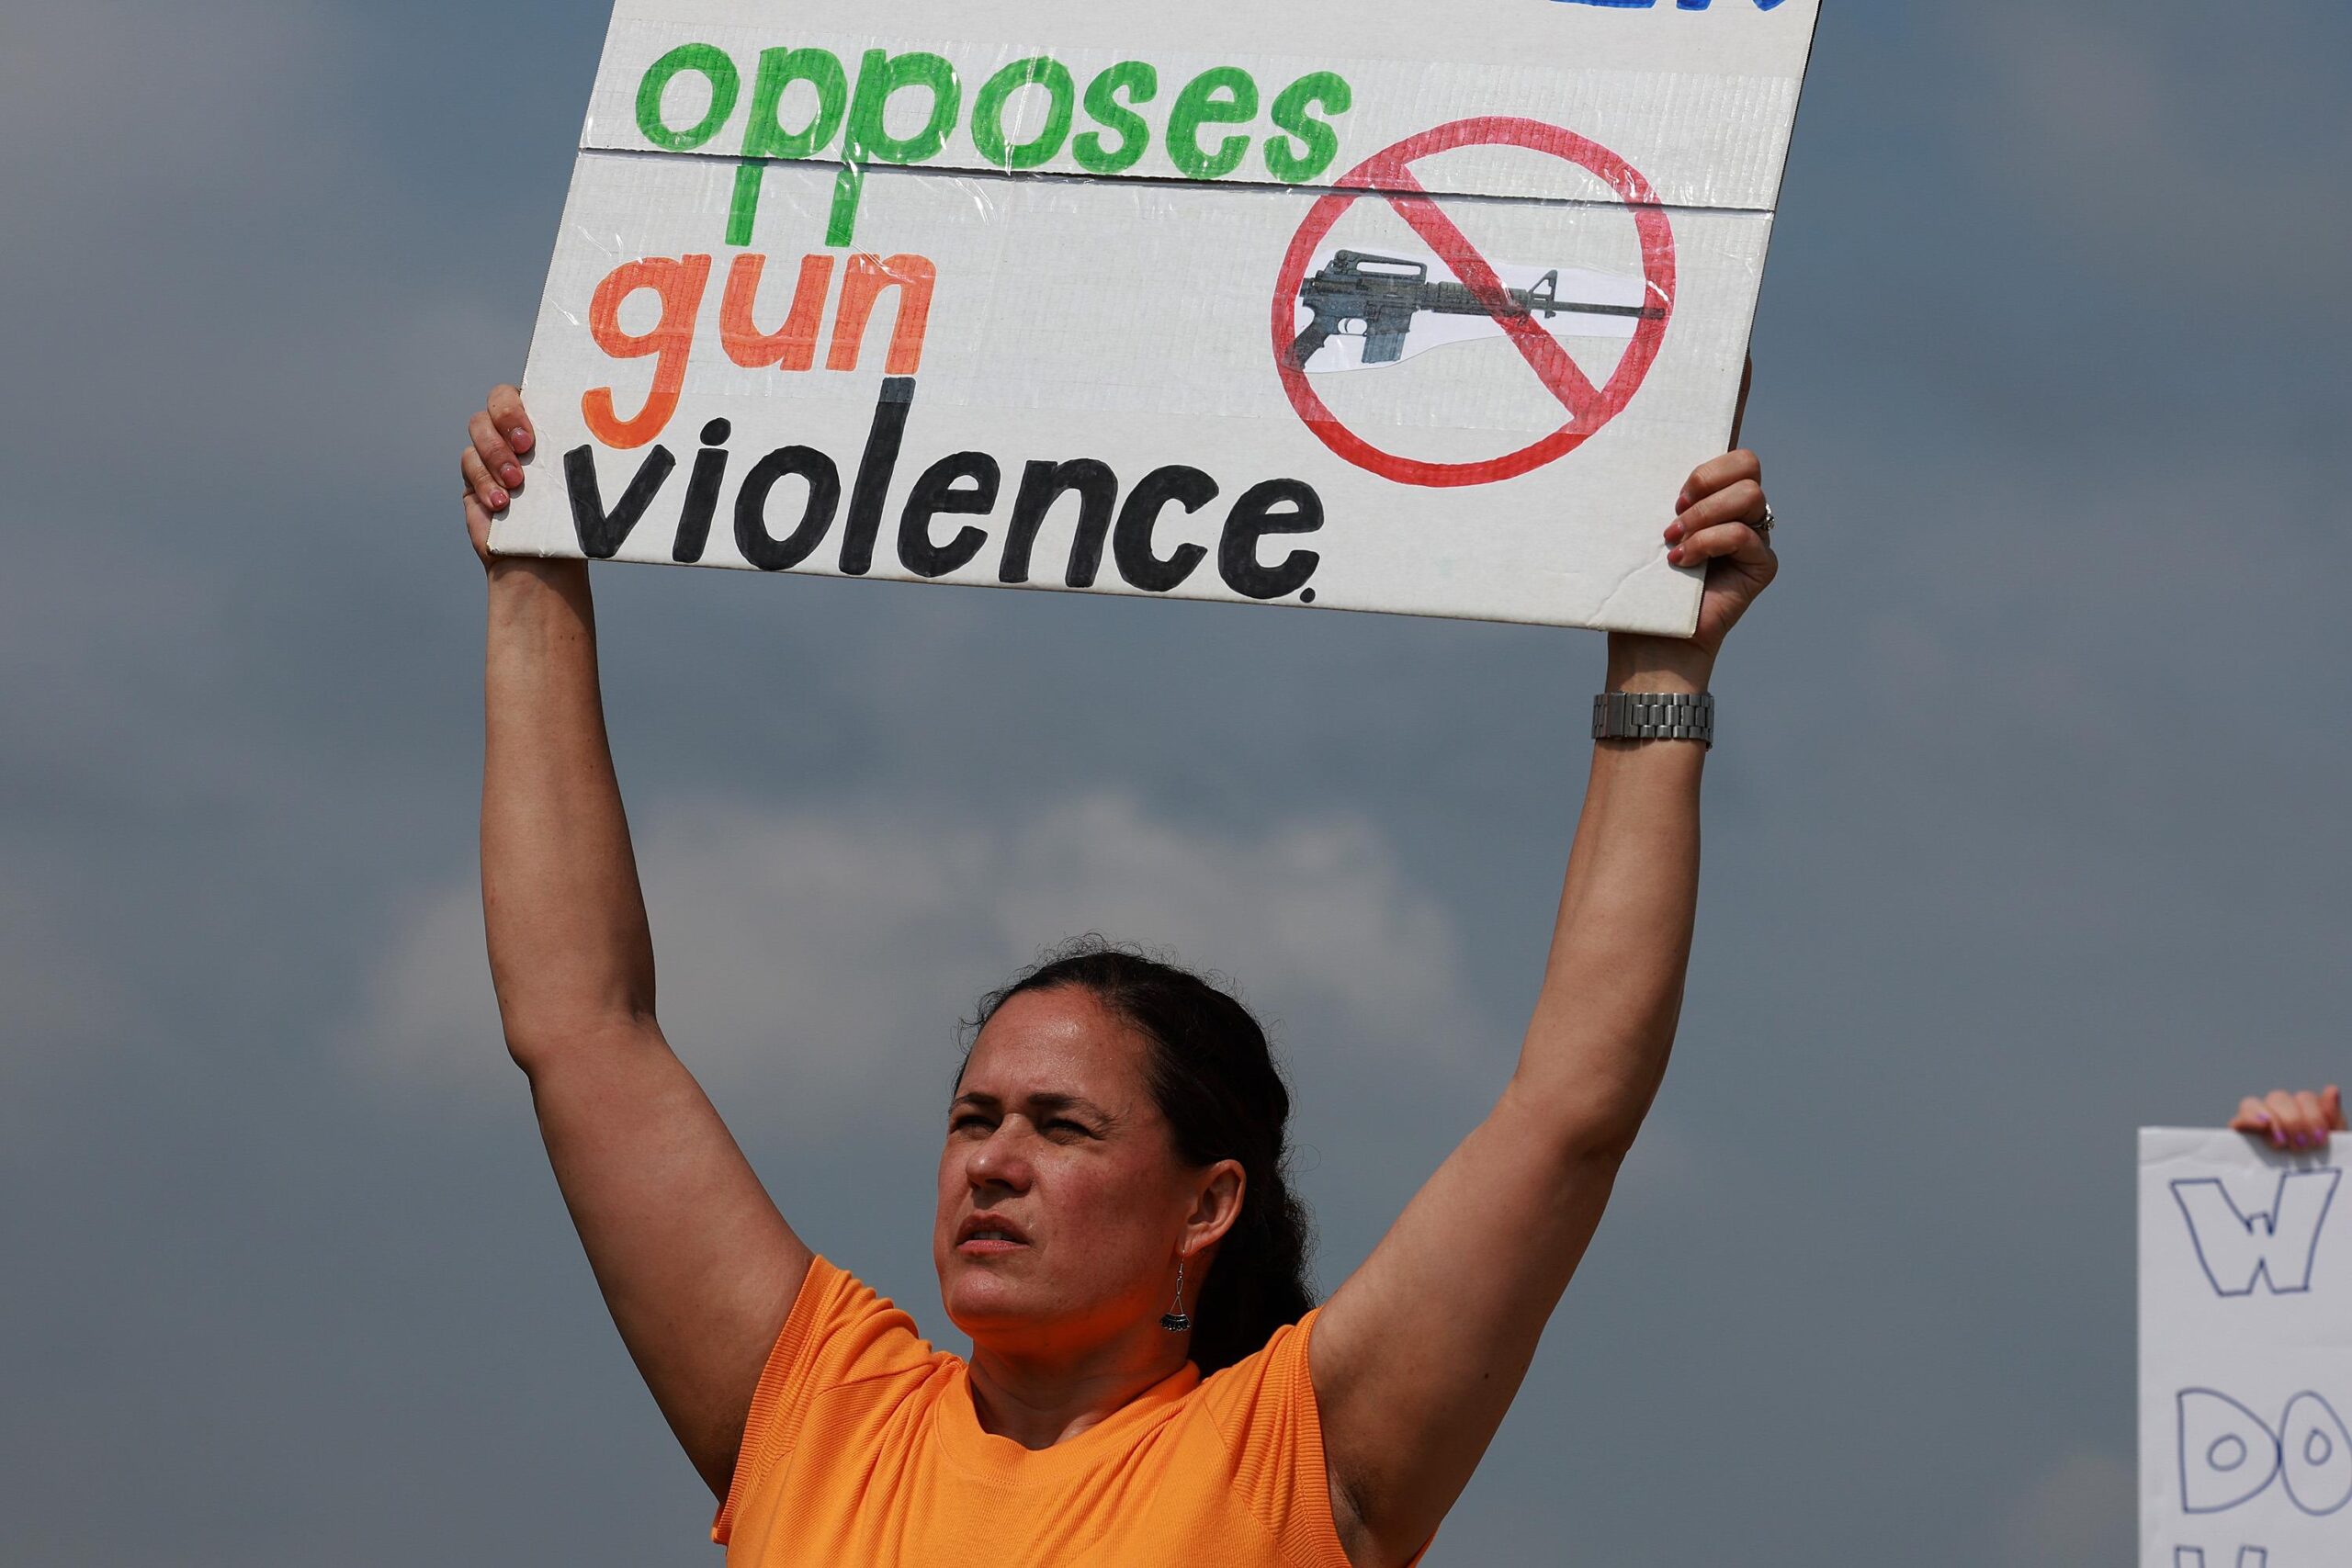 Gun violence soars in US as public health concern: poll